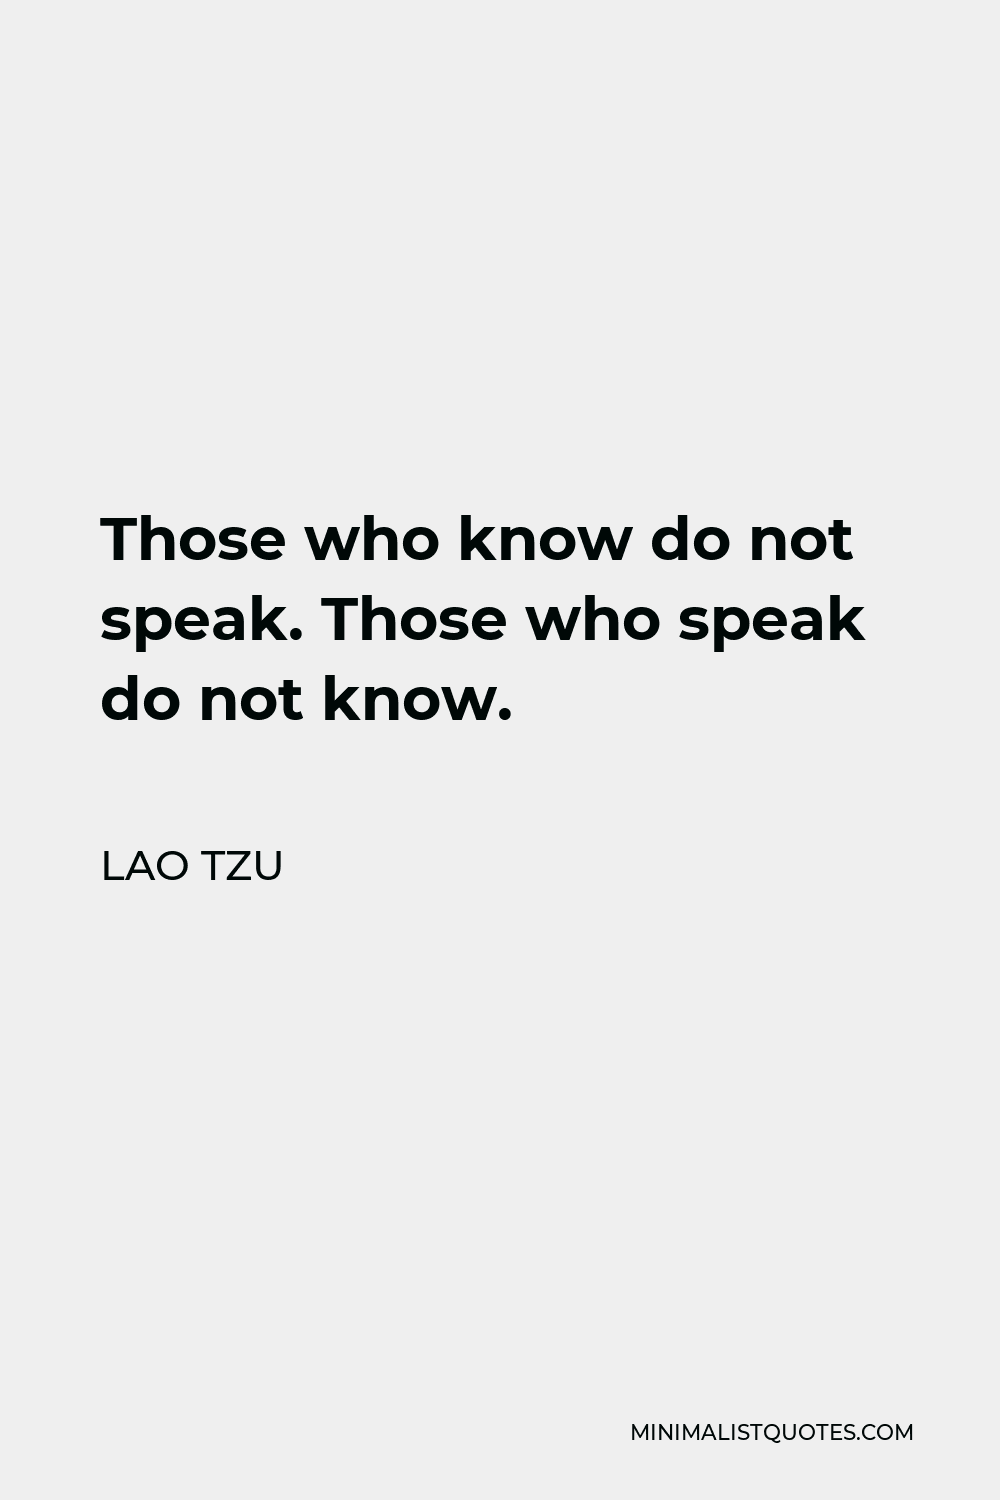 Lao Tzu Quote: Those who know do not speak. Those who speak do not know.